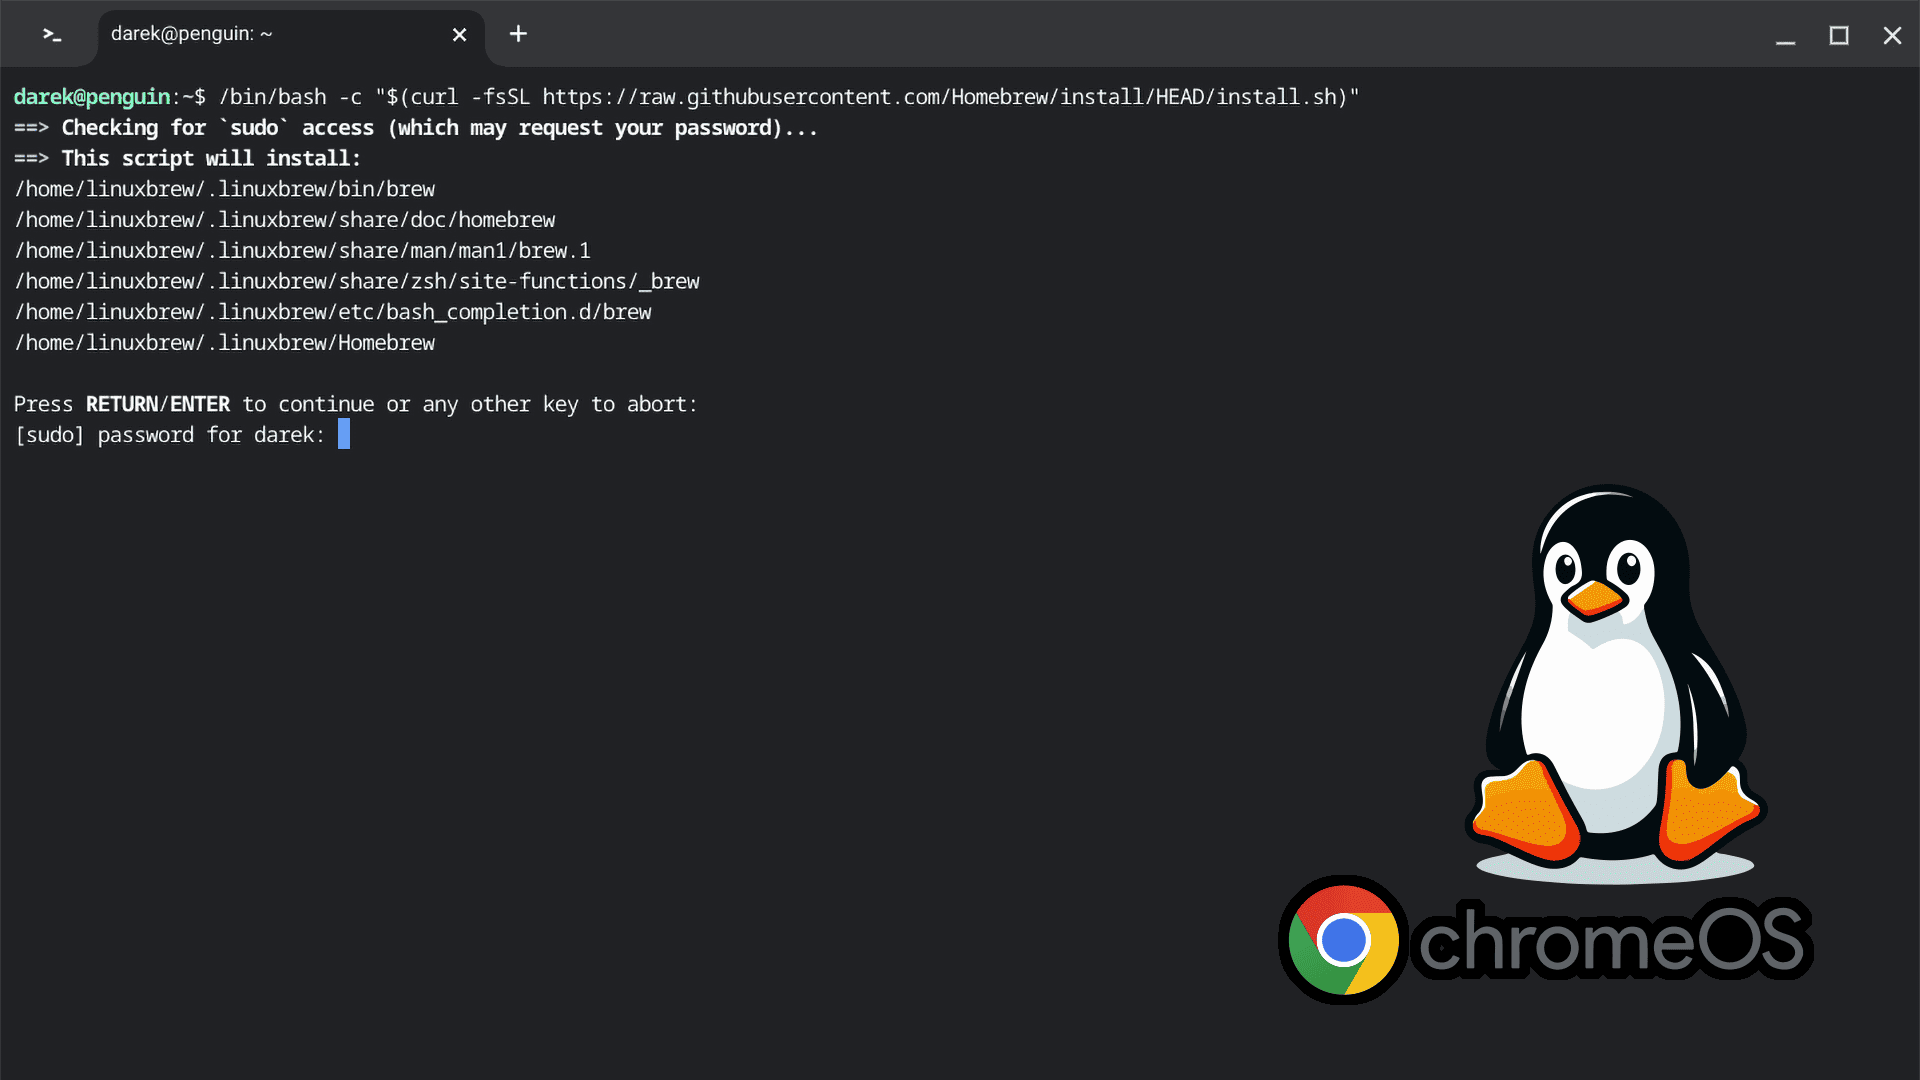 ChromeOS, Linux environment and sudo password